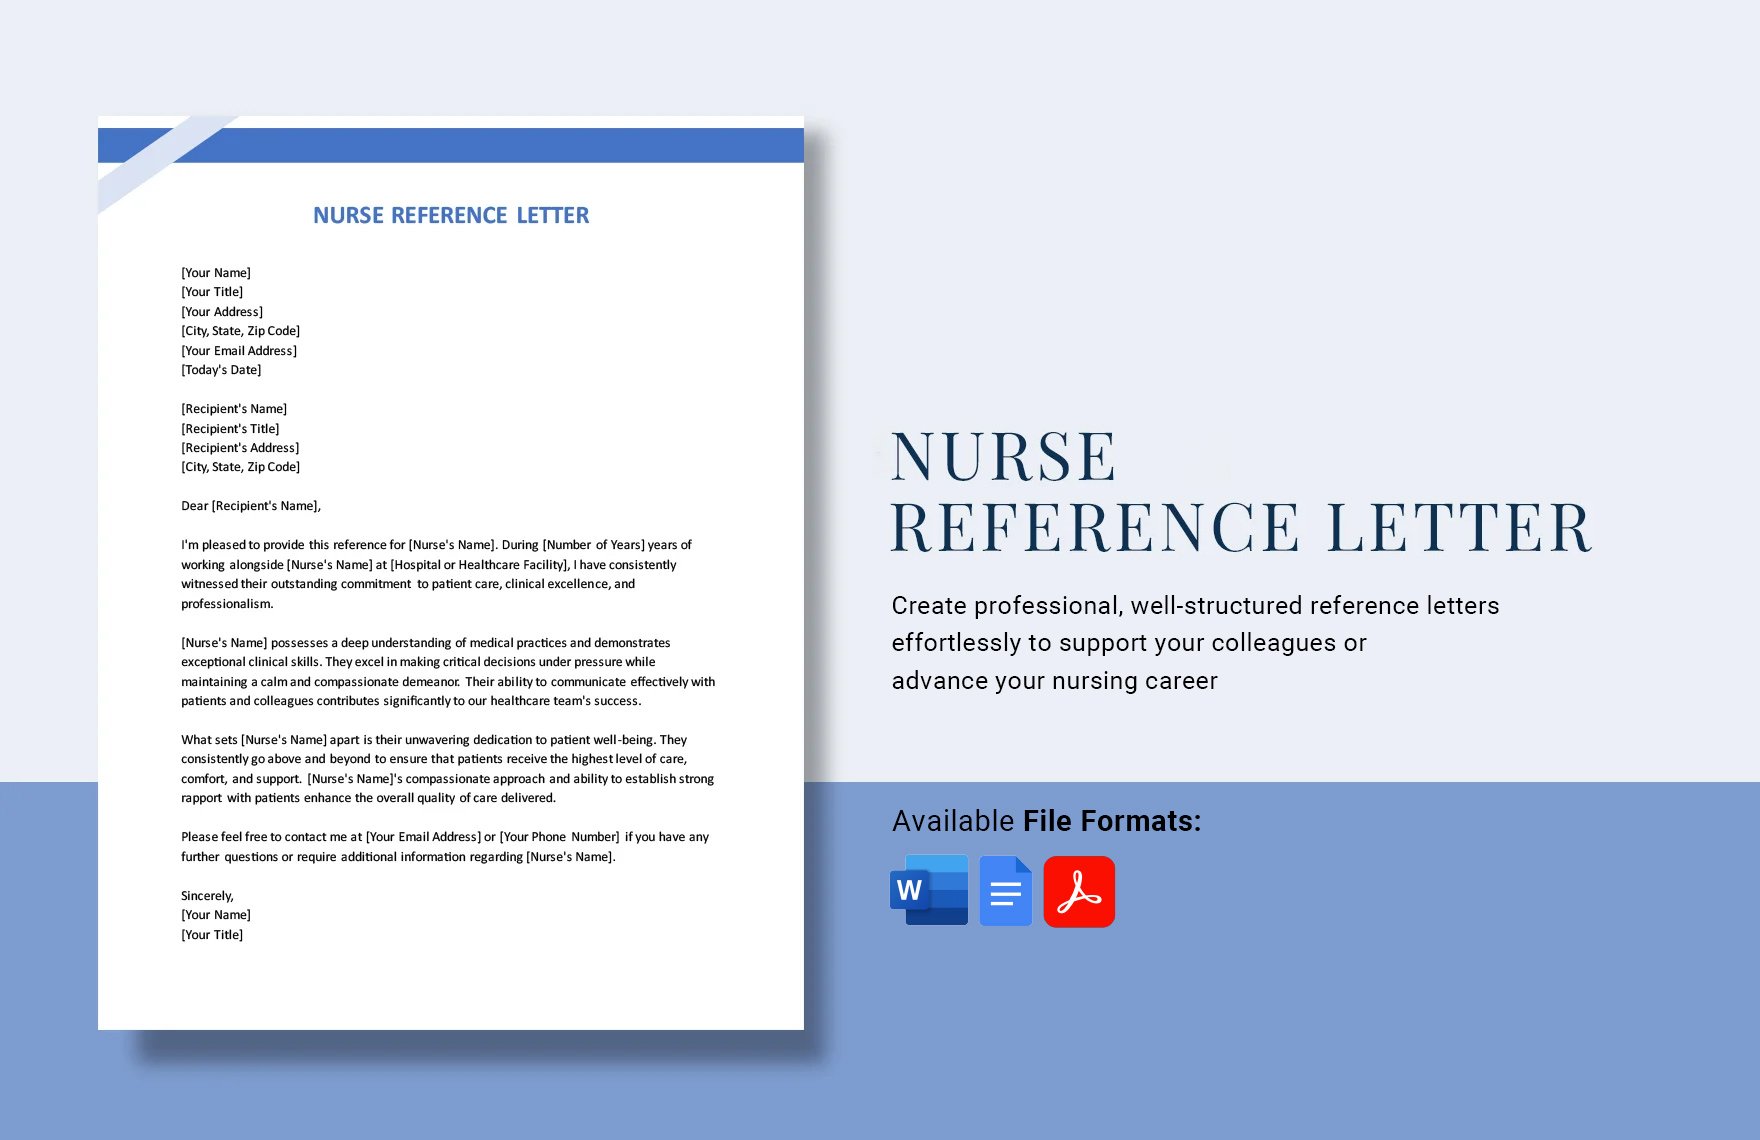 Nurse Reference Letter in Word, Google Docs, PDF